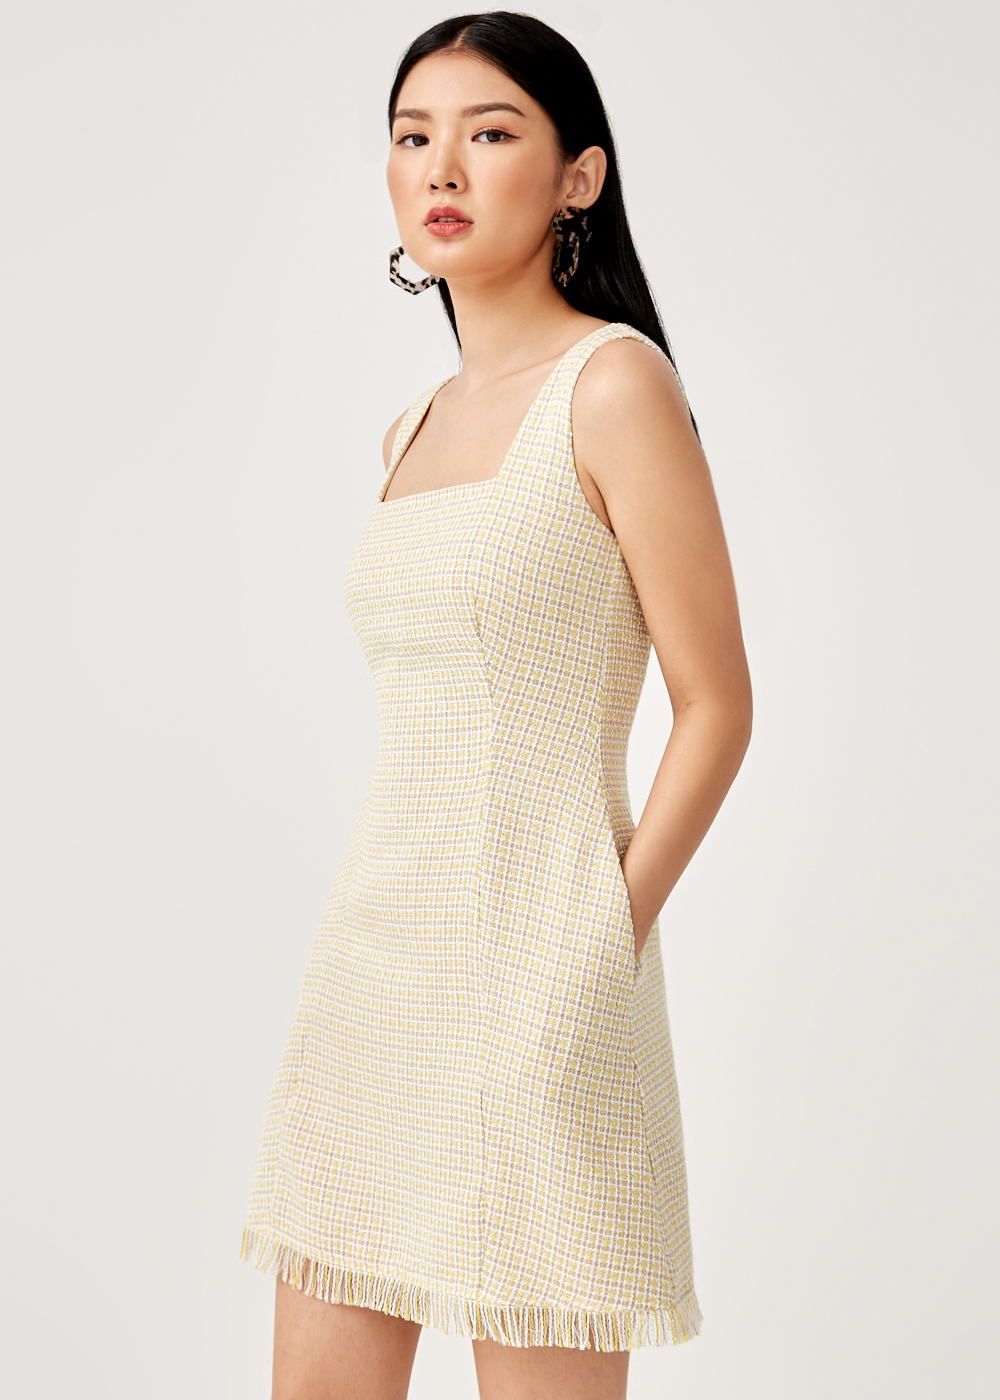 Buy Leia Tweed A-line Mini Dress @ Love, Bonito Singapore | Shop 